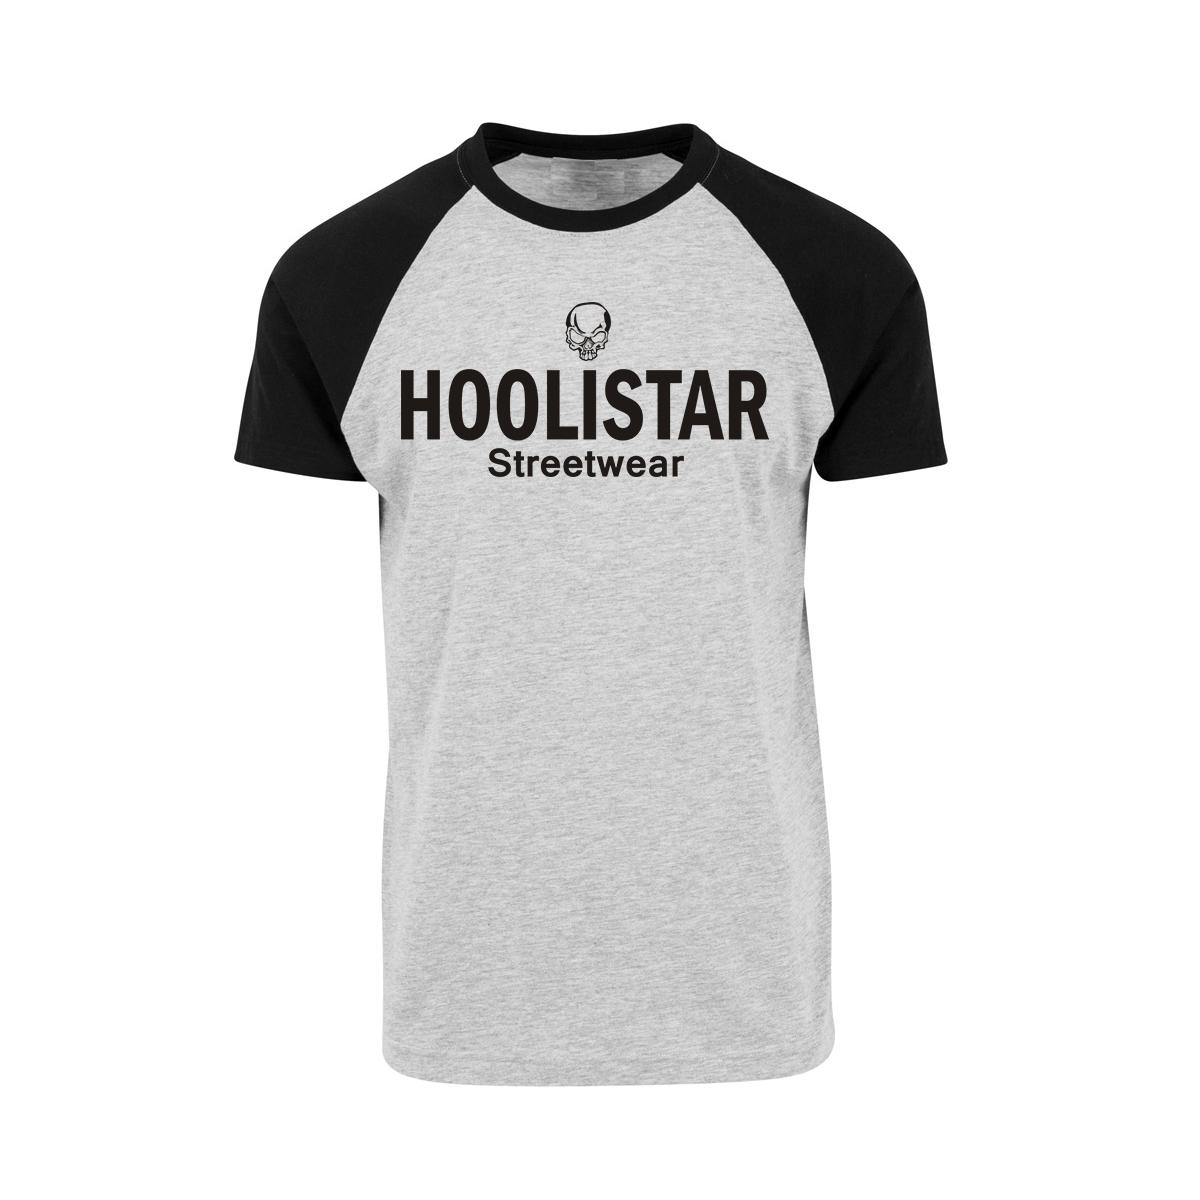 Hoolistar Streetwear - Männer T-Shirt - schwarz/grau